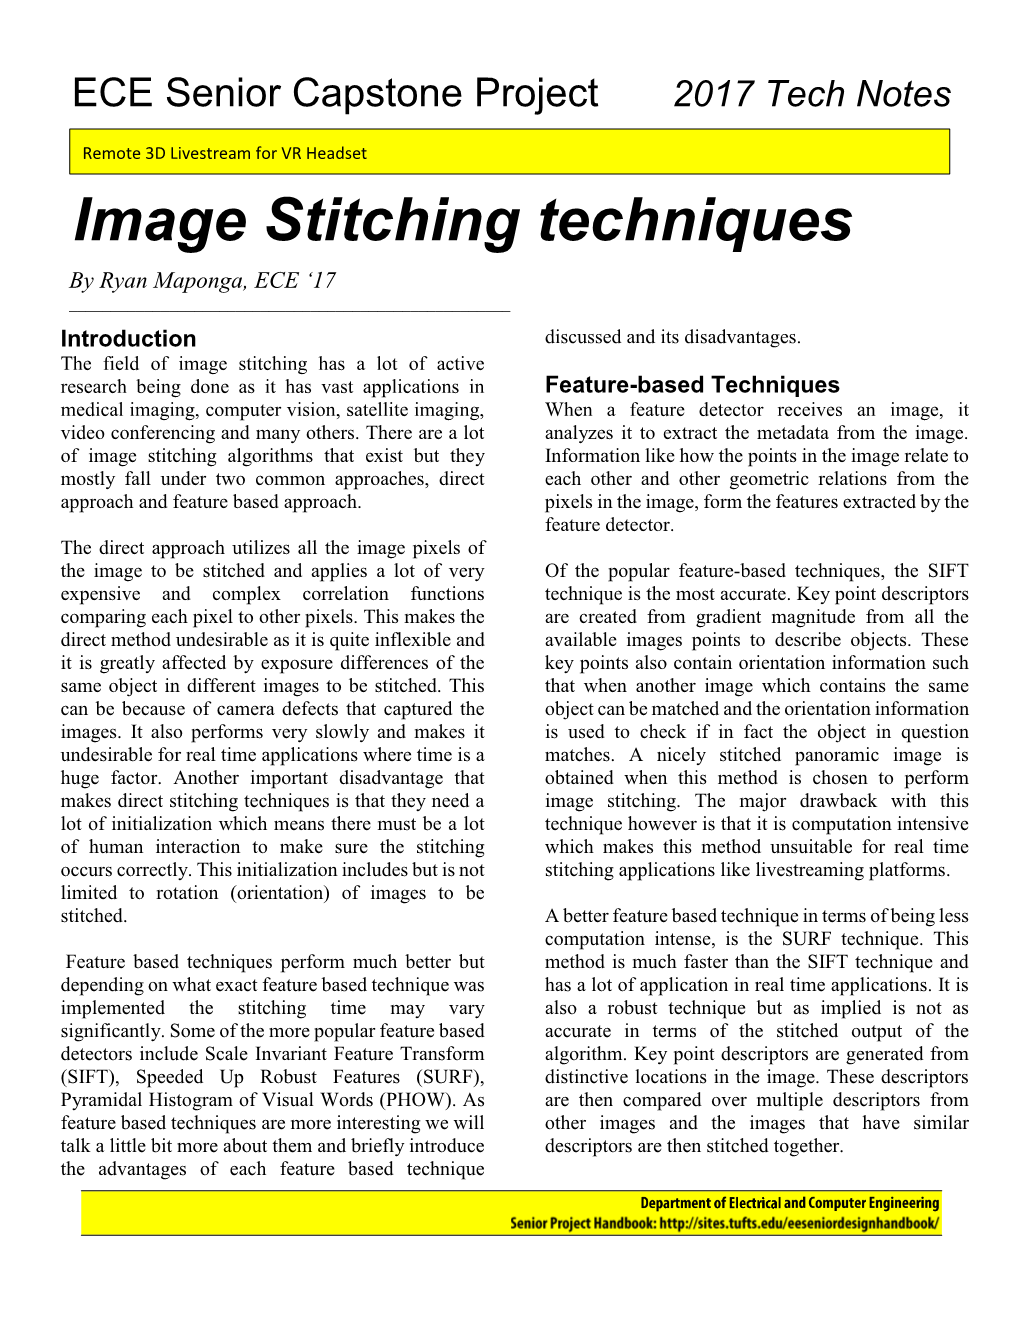 Image Stitching Techniques